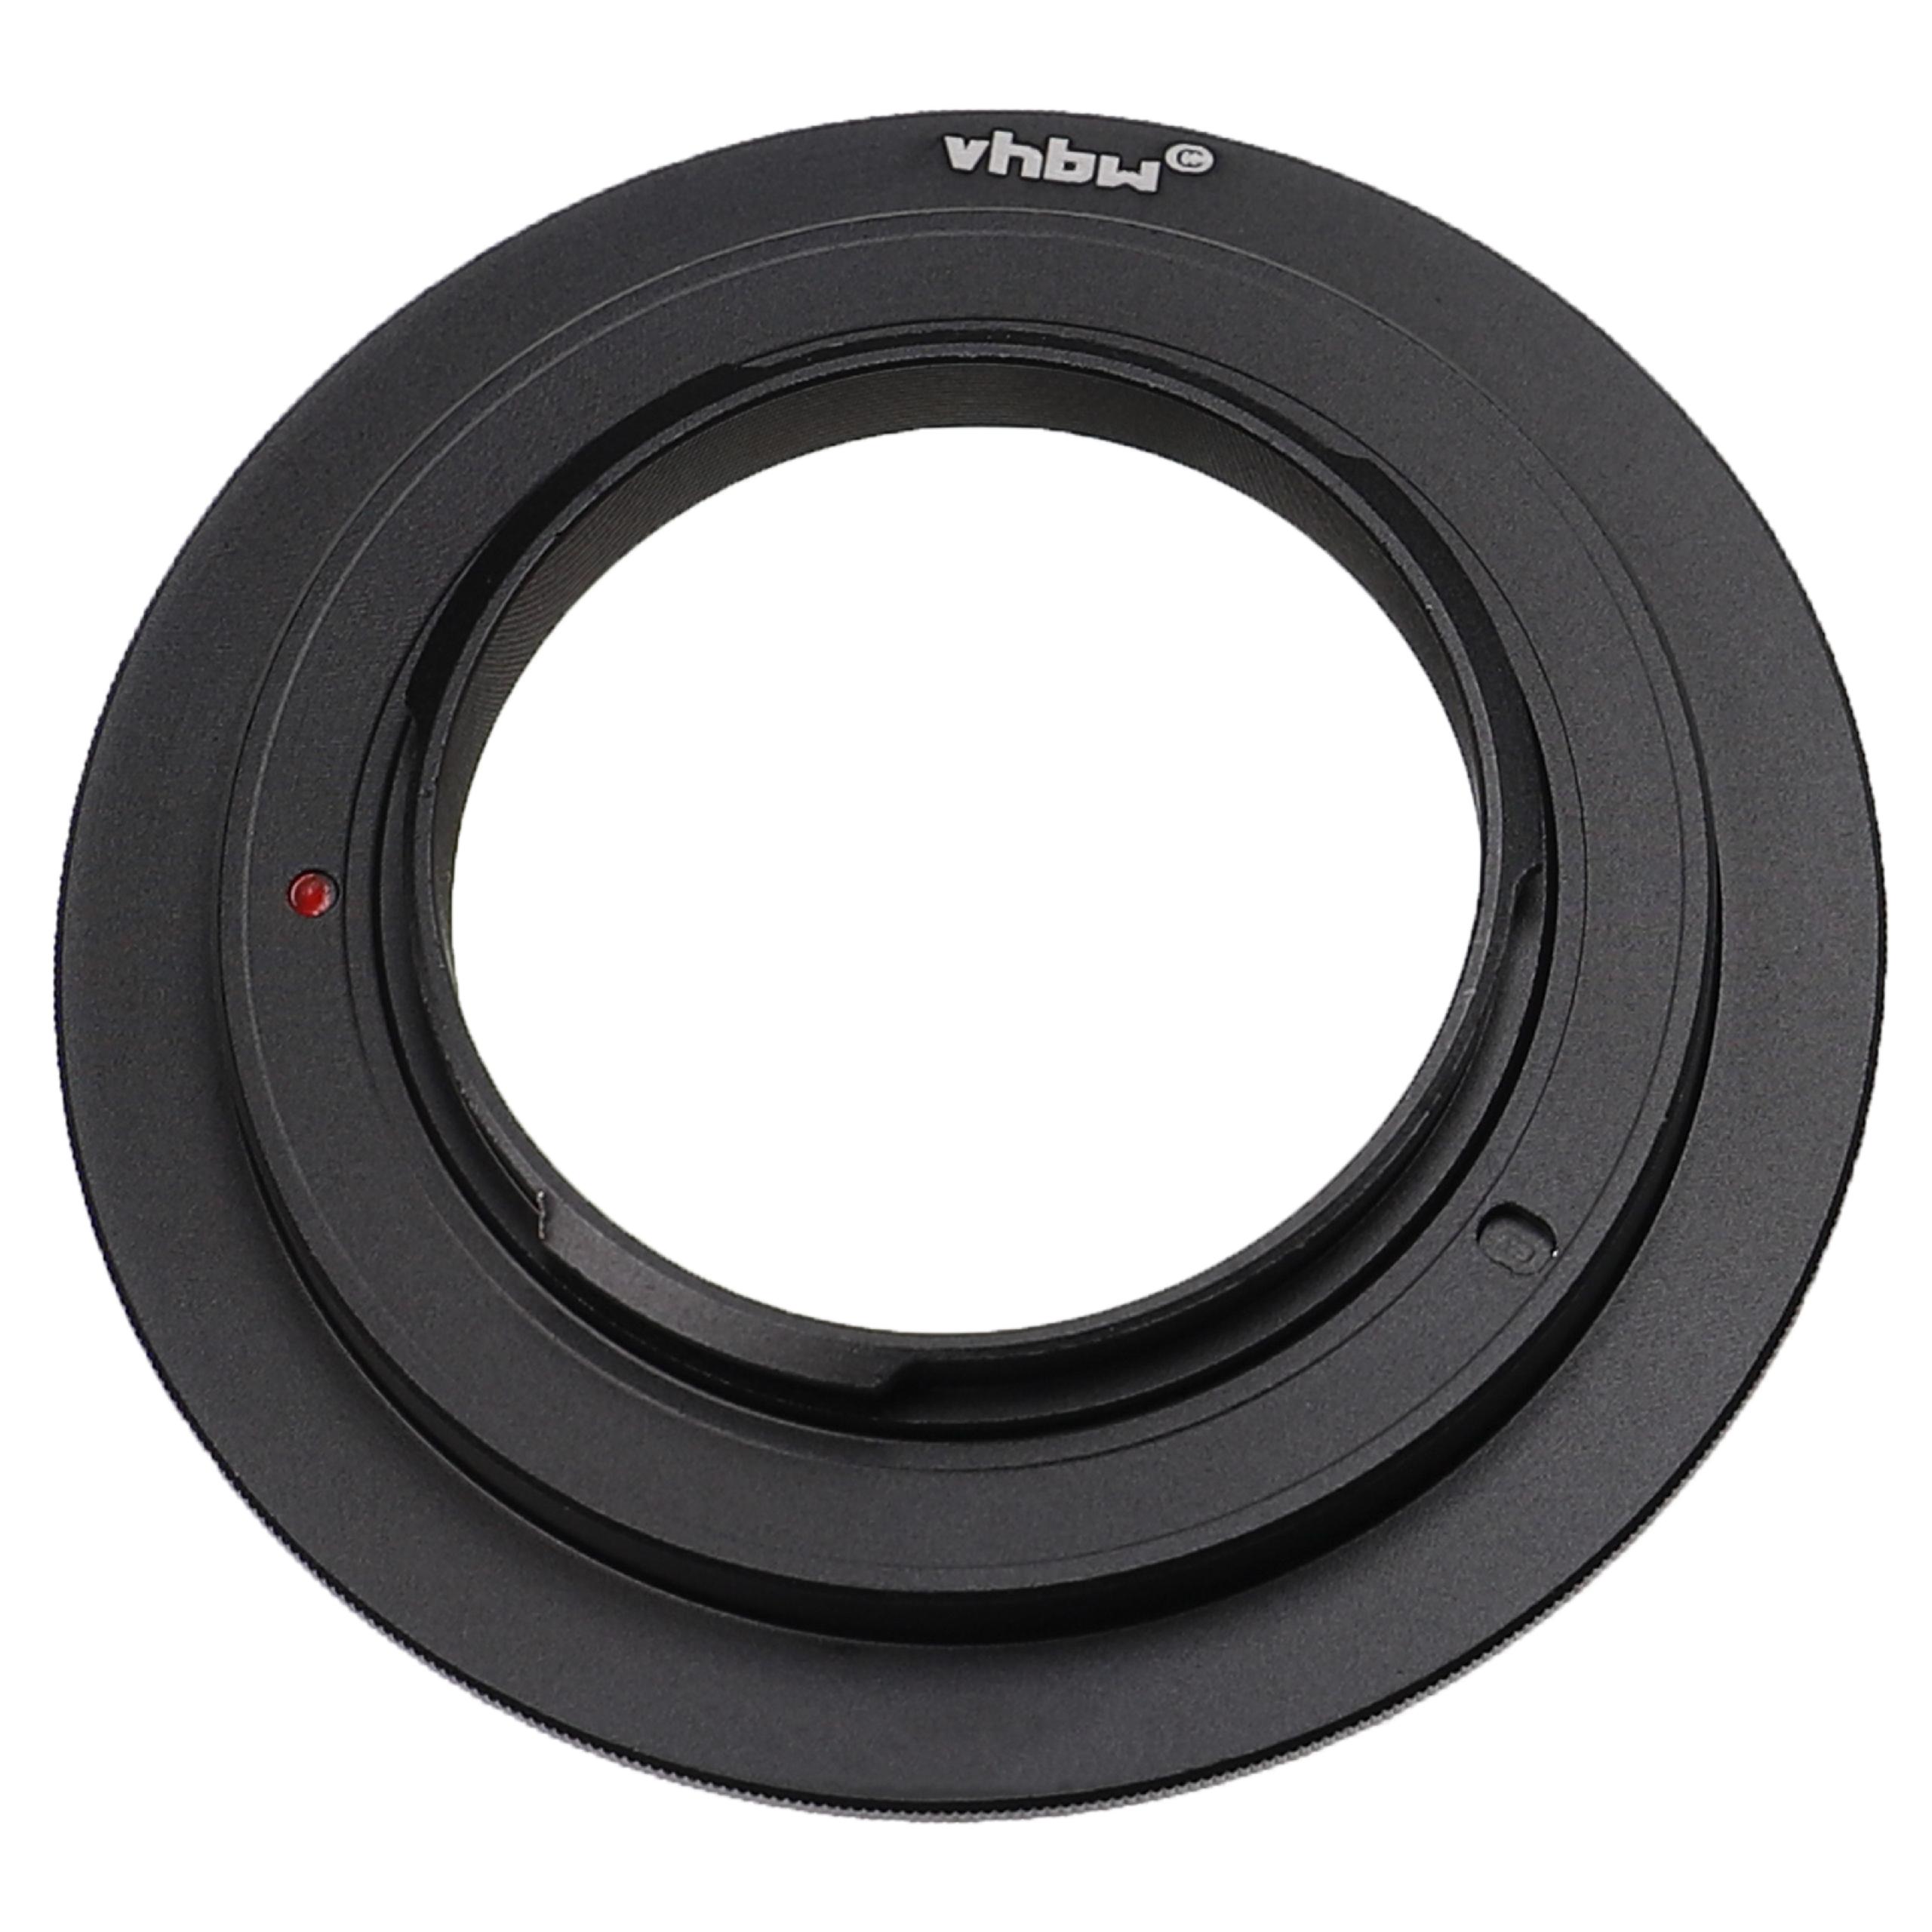 72 mm Retro Adapter suitable for Sony NEX E-Mount Cameras & Lenses - Retro Ring